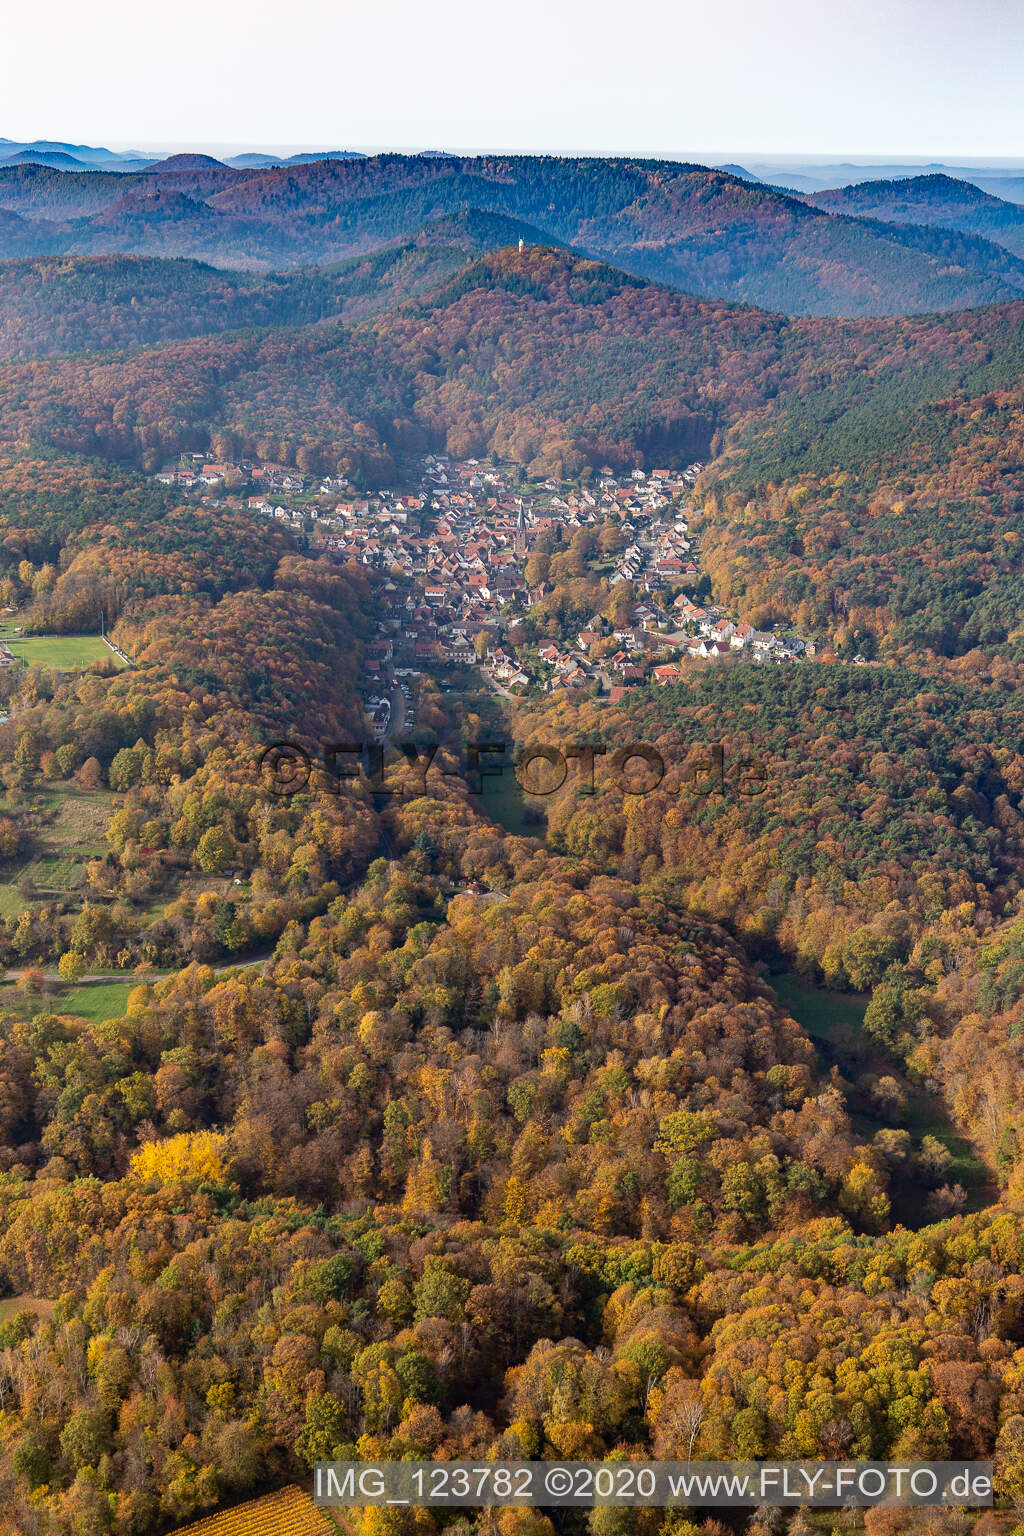 Bird's eye view of Dörrenbach in the state Rhineland-Palatinate, Germany